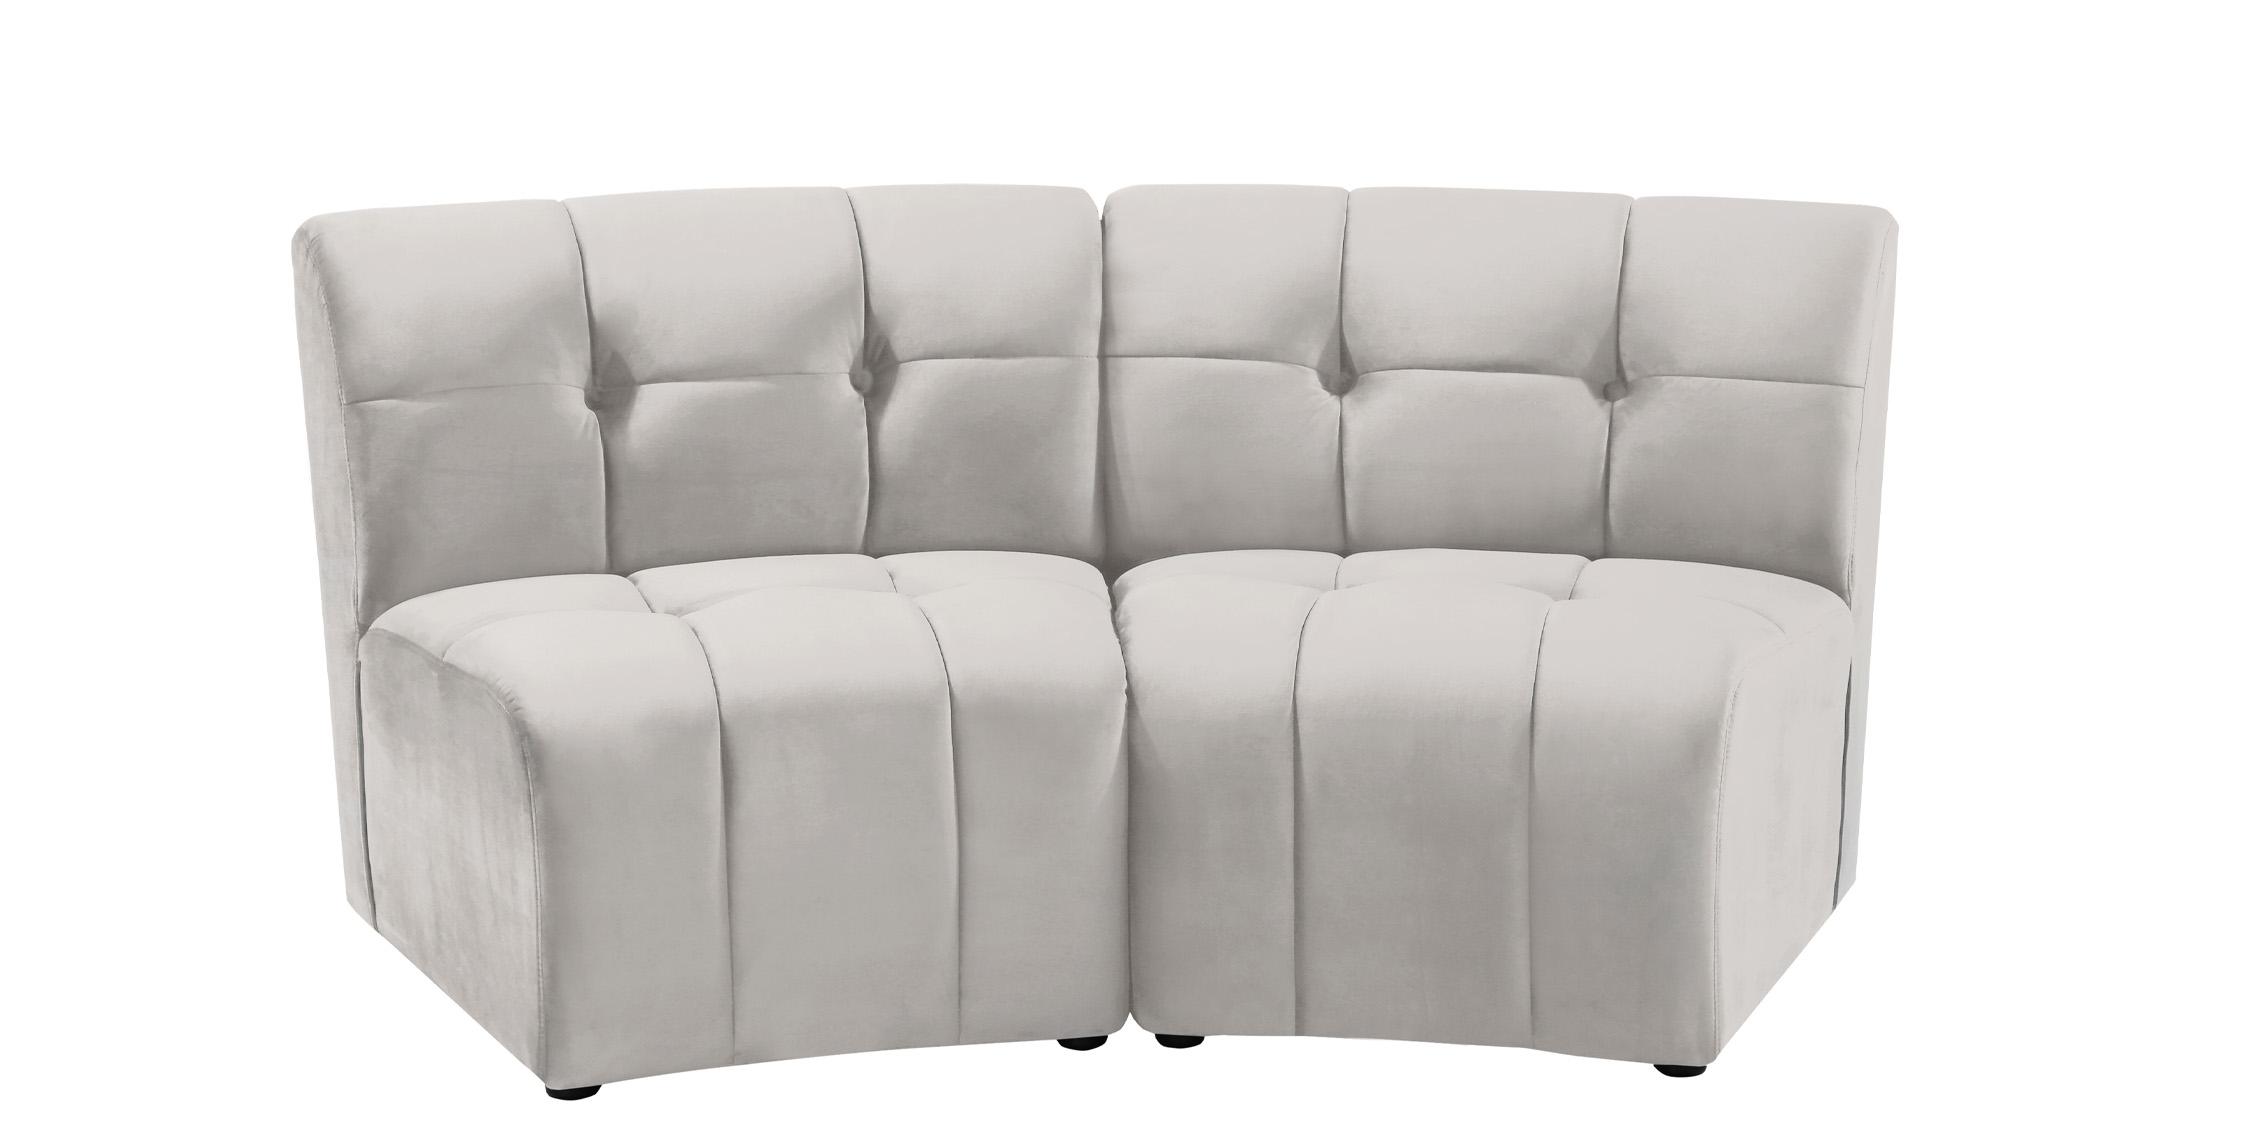 Contemporary, Modern Modular Sectional Sofa LIMITLESS 645Cream-2PC 645Cream-2PC in Cream Velvet